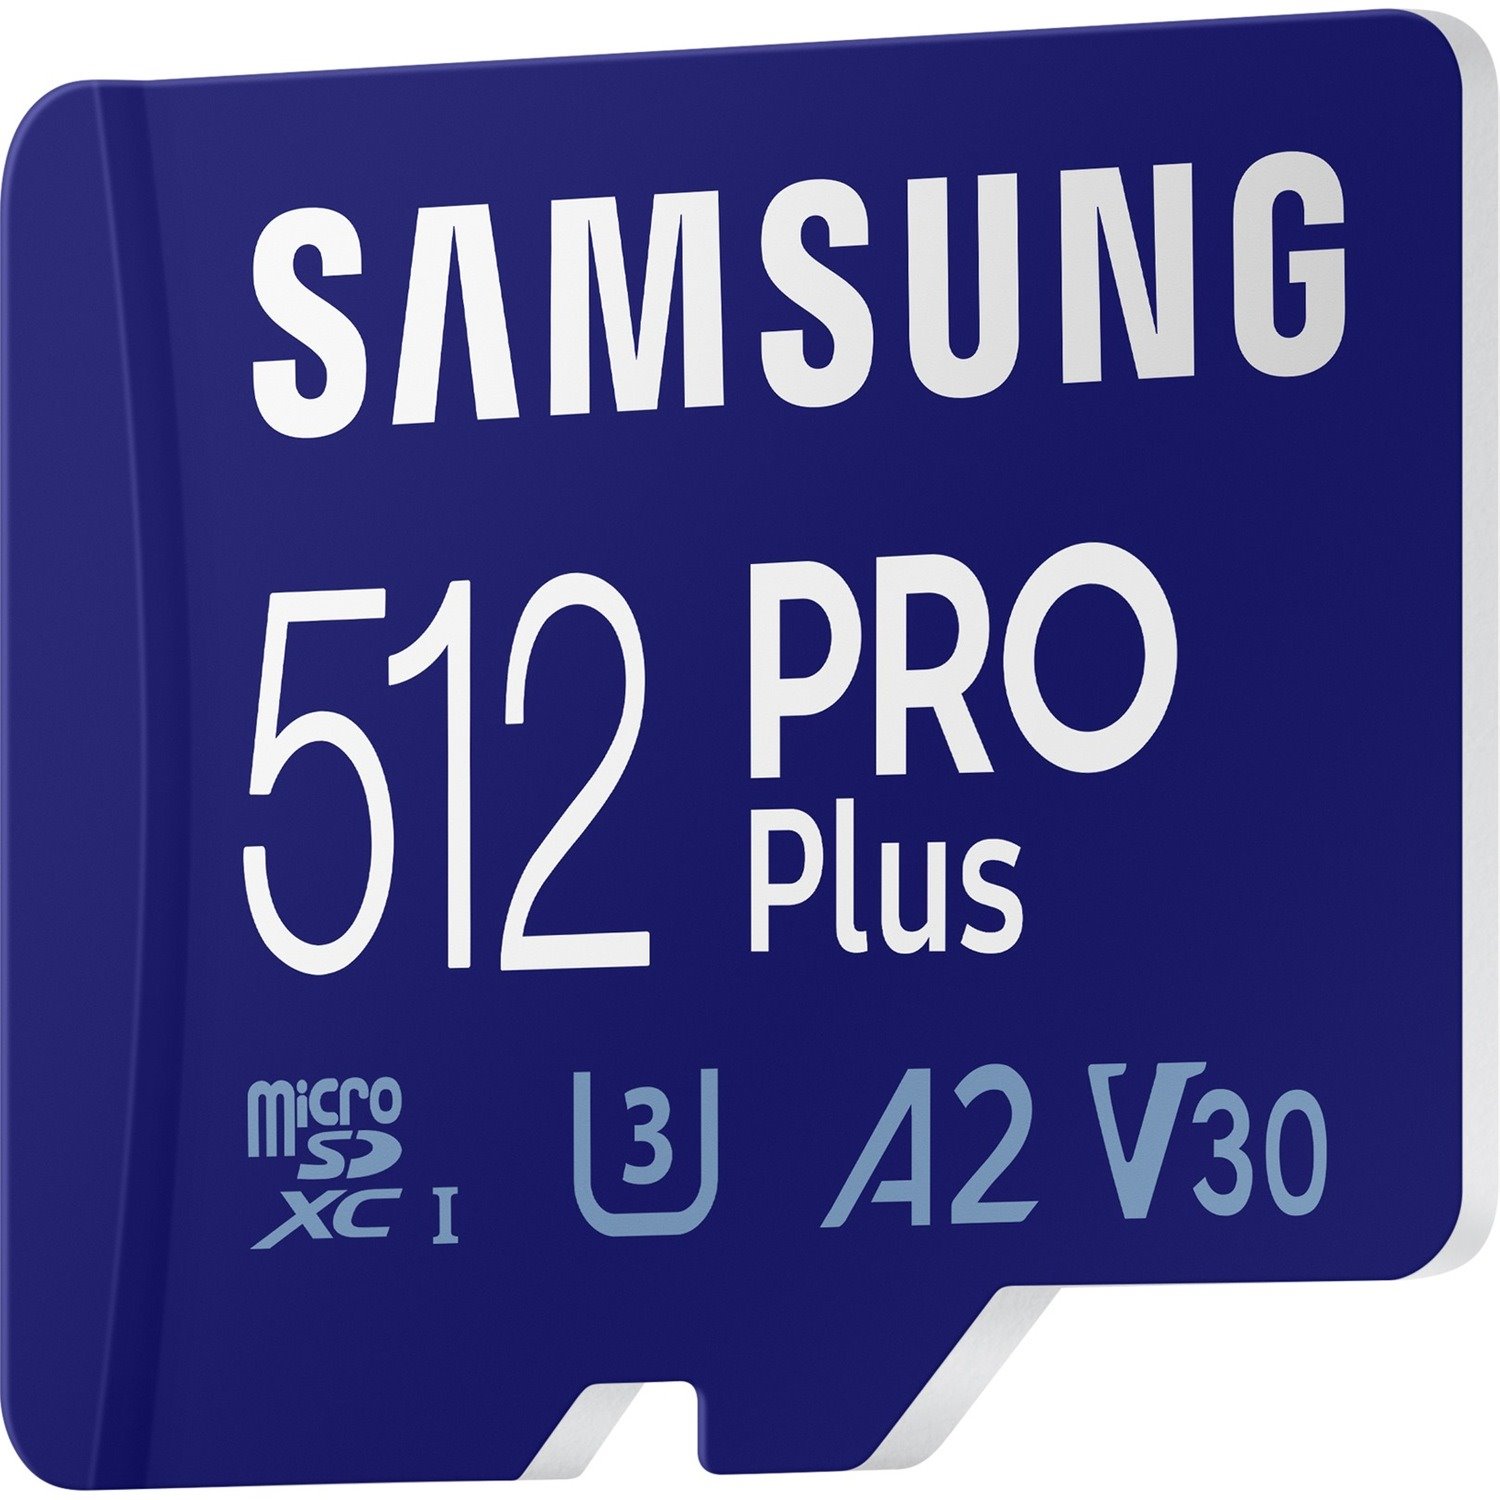 Samsung PRO Plus 512 GB Class 10/UHS-I (U3) V30 microSDXC